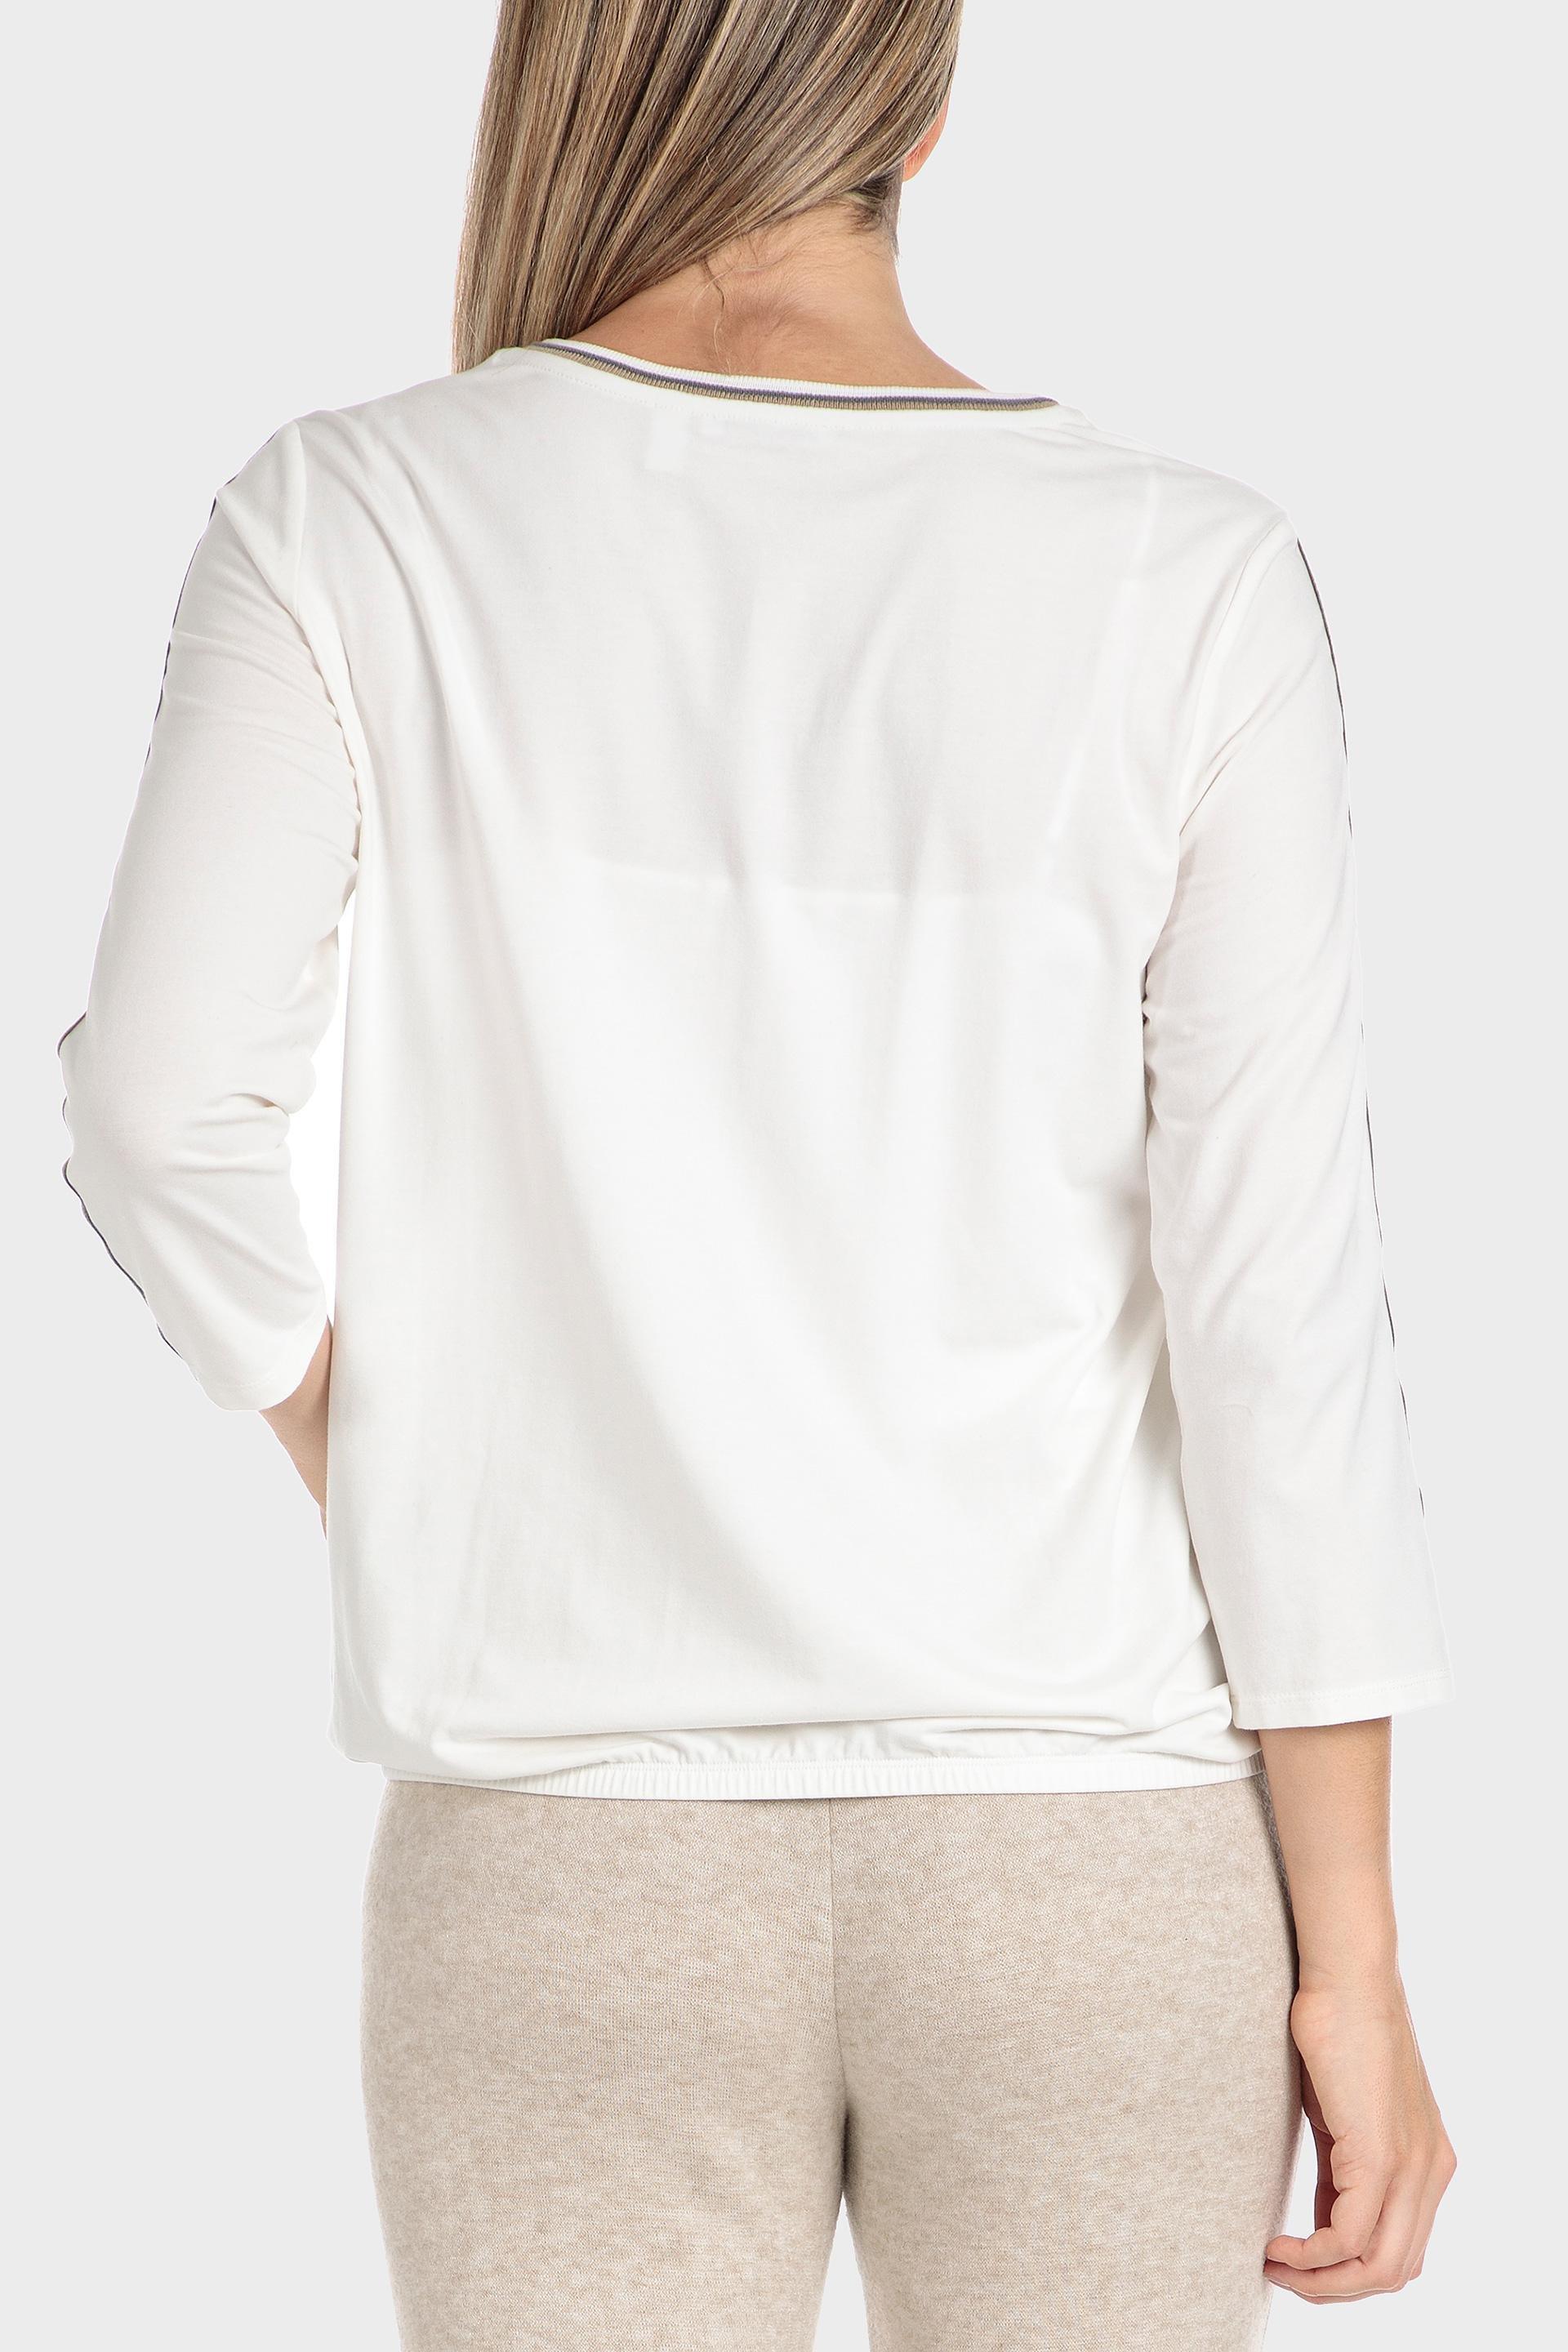 Punt Roma - White Sports T-Shirt